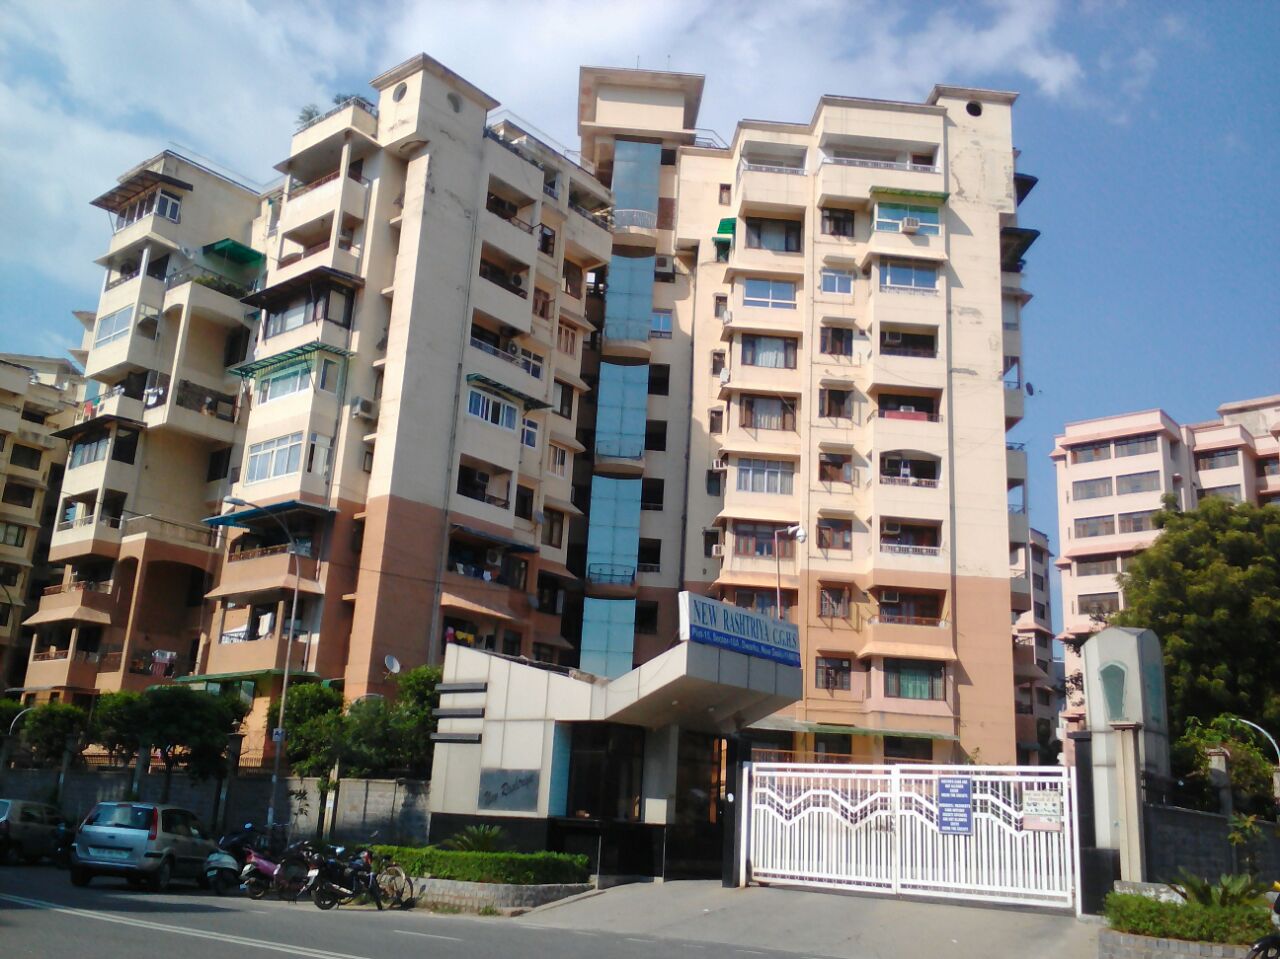 Sector 18, plot 15, Aakriti Apartment (New Rashtriya) dwarka